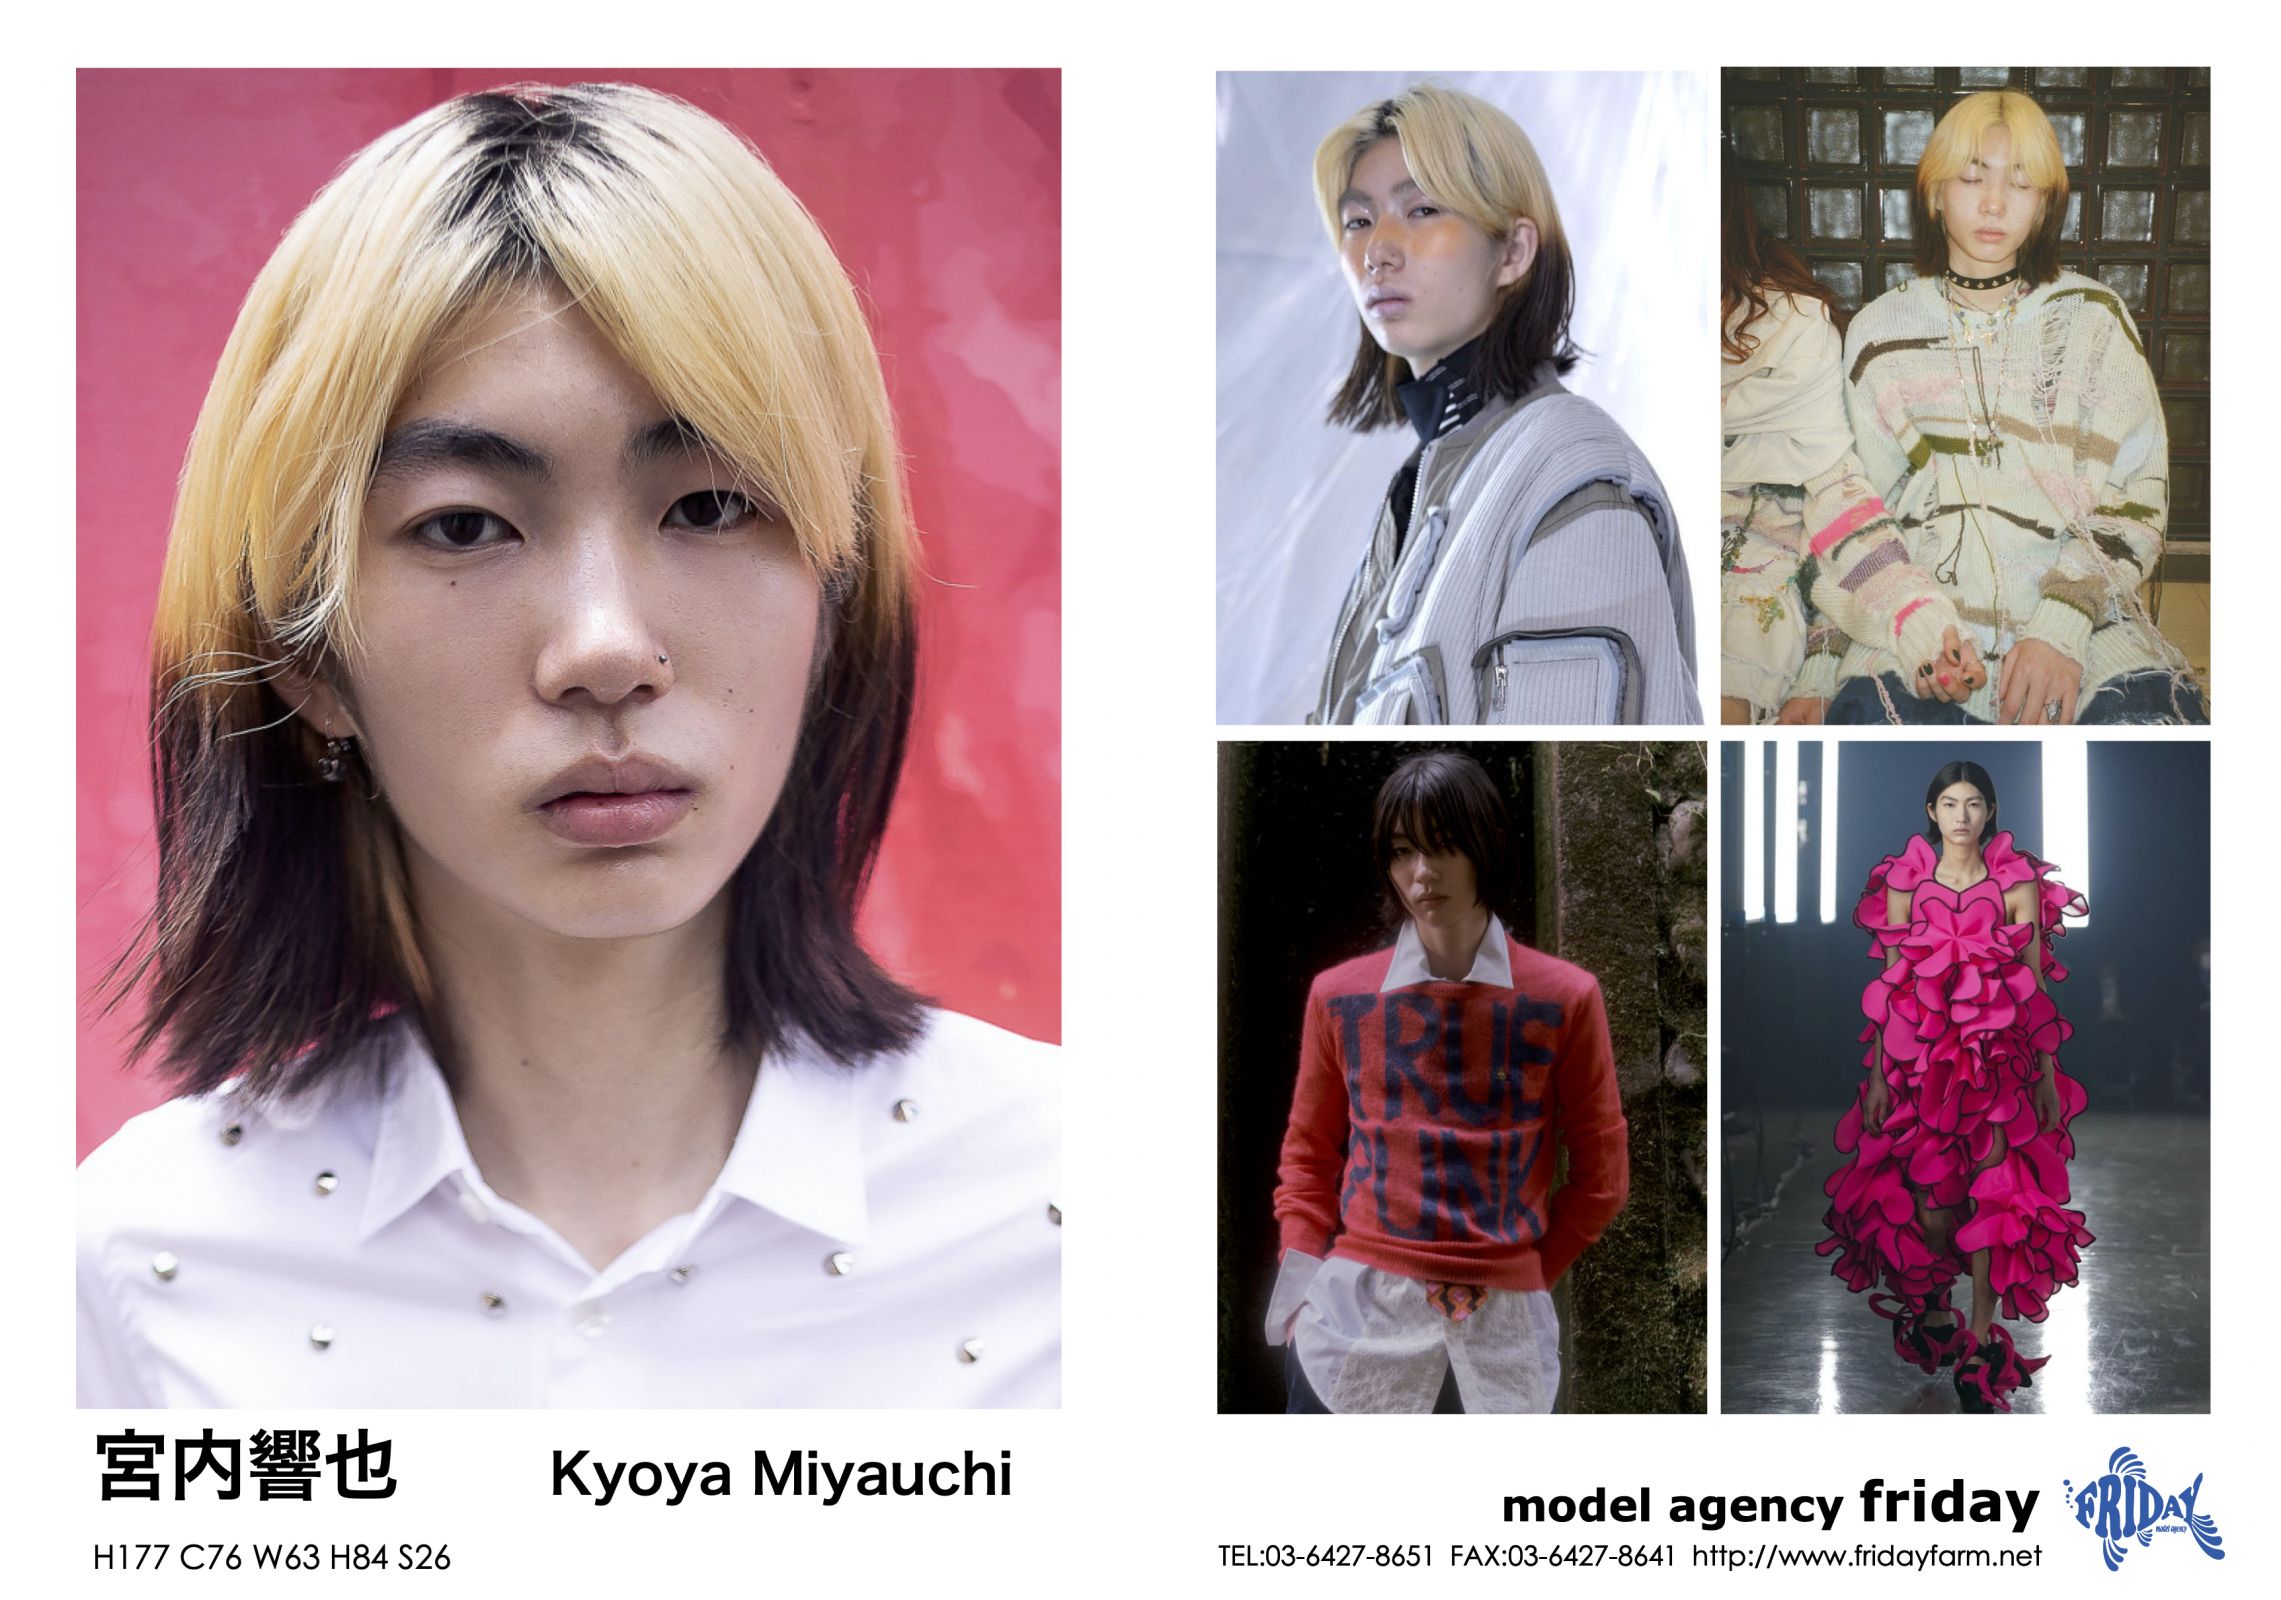 宮内 響也 - Kyoya Miyauchi | model agency friday